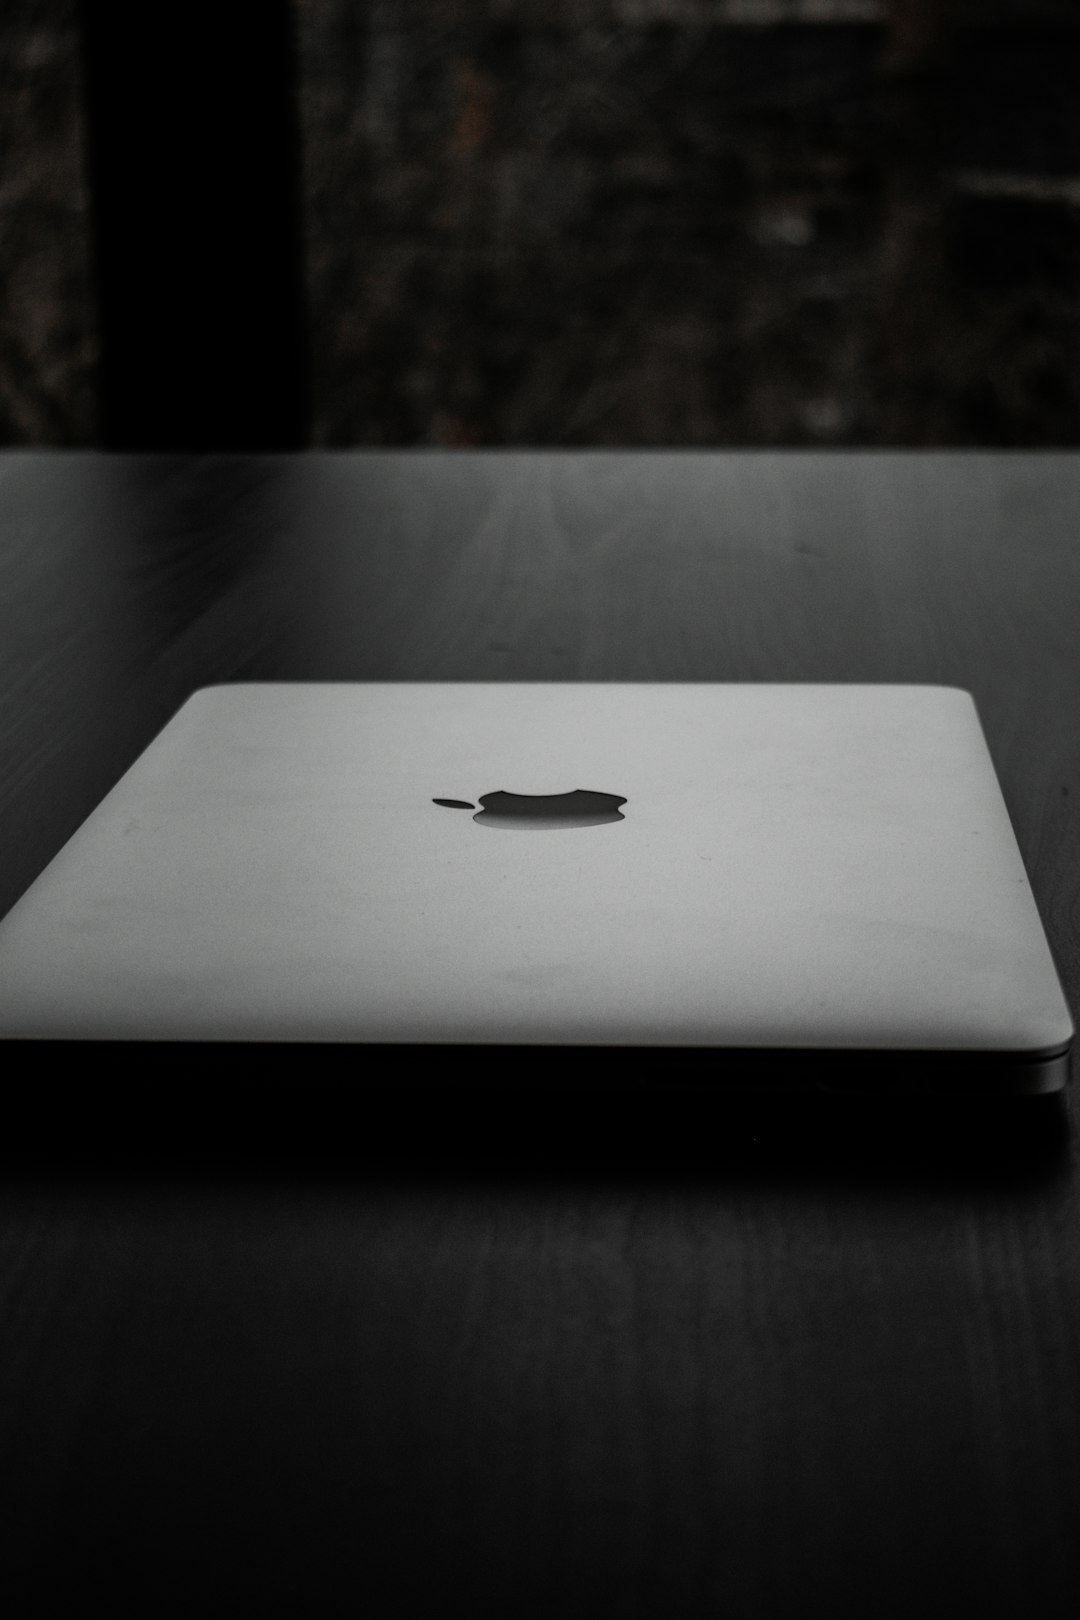 silver macbook on black table